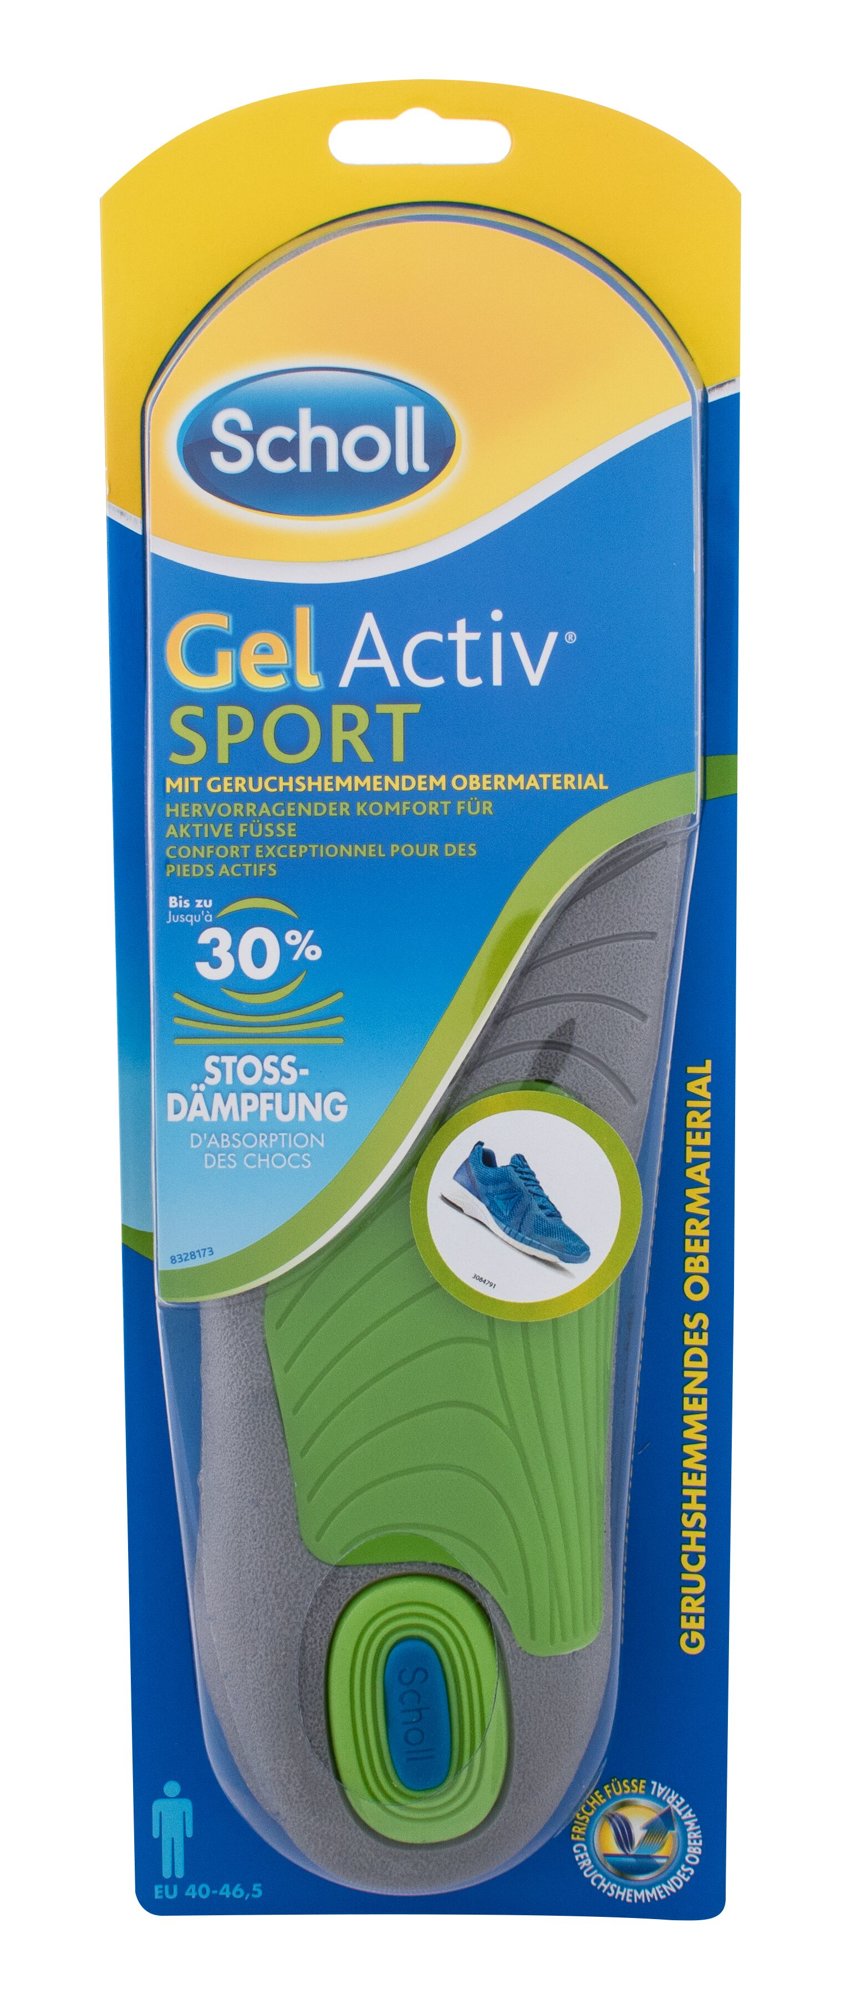 Scholl Gel Activ Sport batų įdėklas